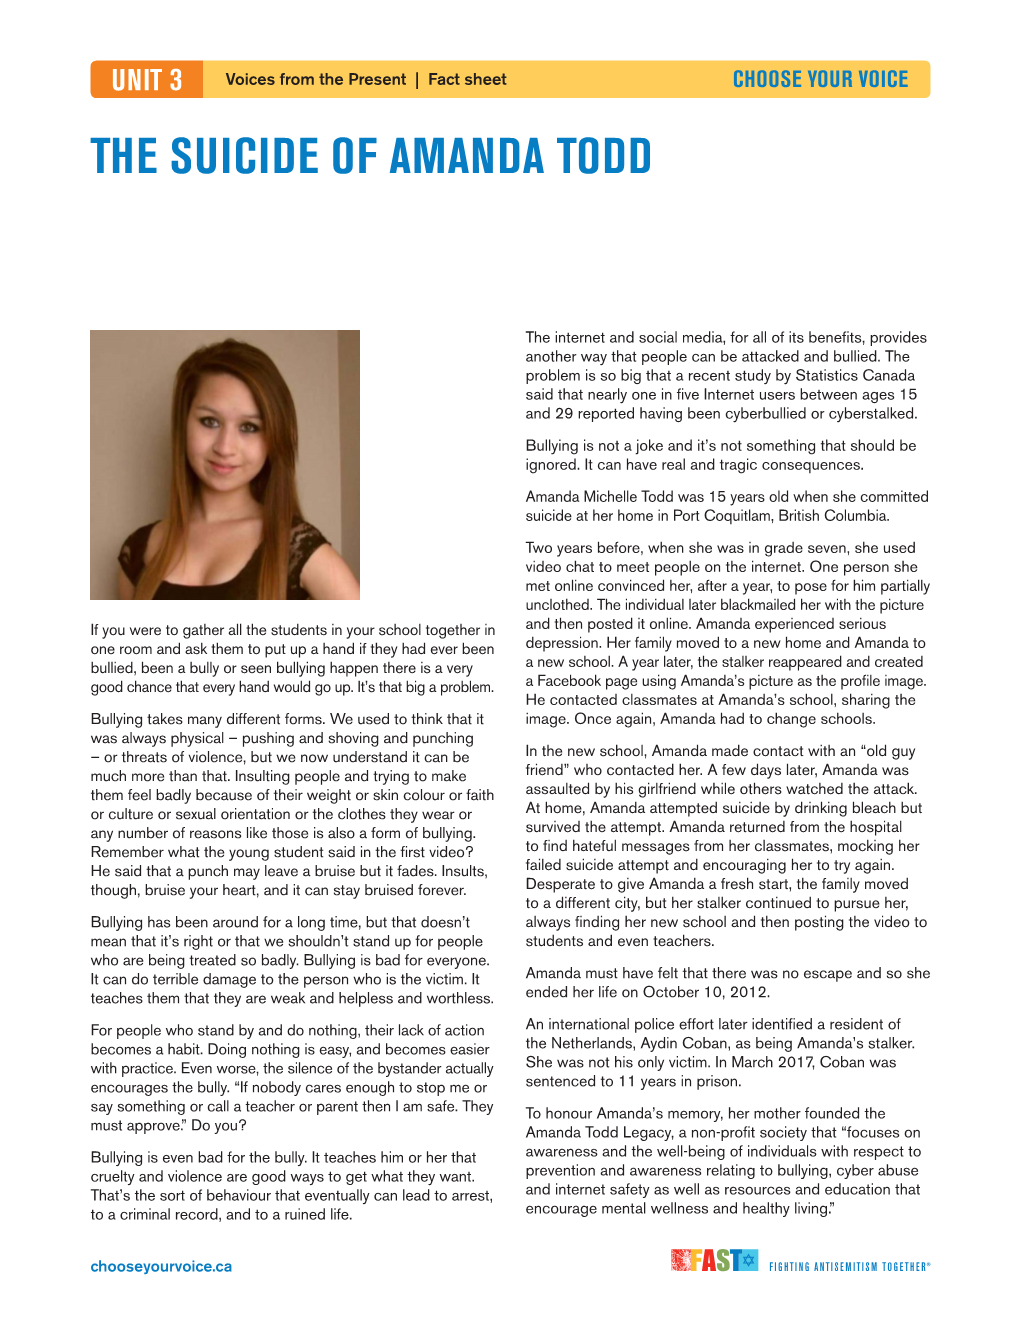 The Suicide of Amanda Todd